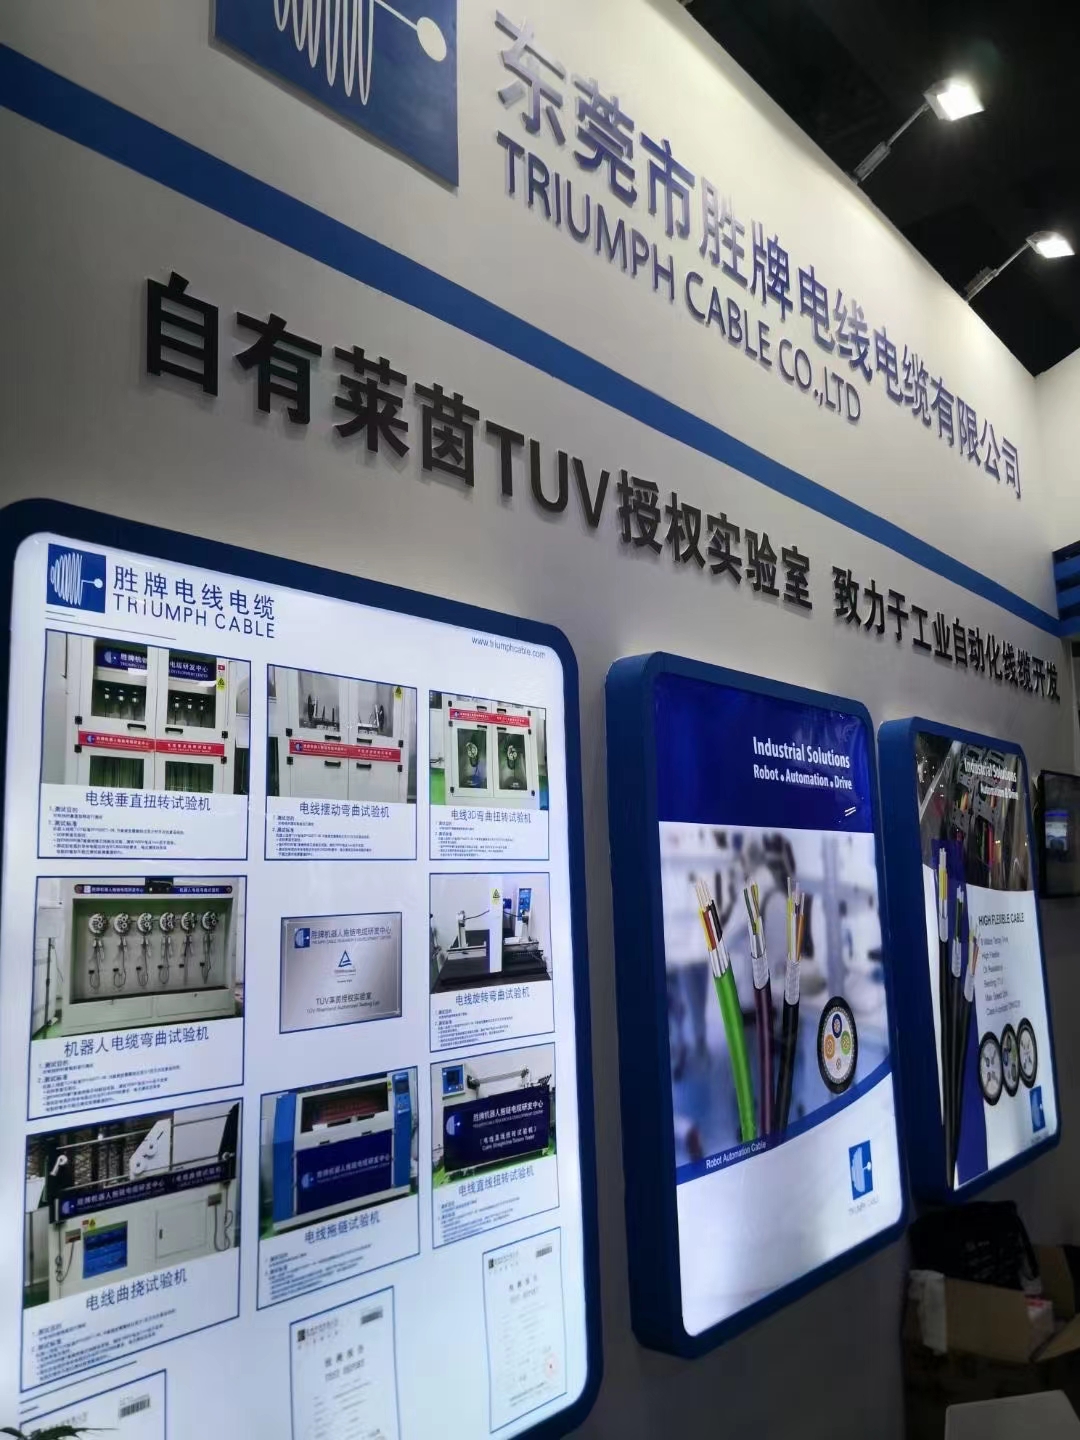 Triumph Cable Exhibition-Guangzhou Station